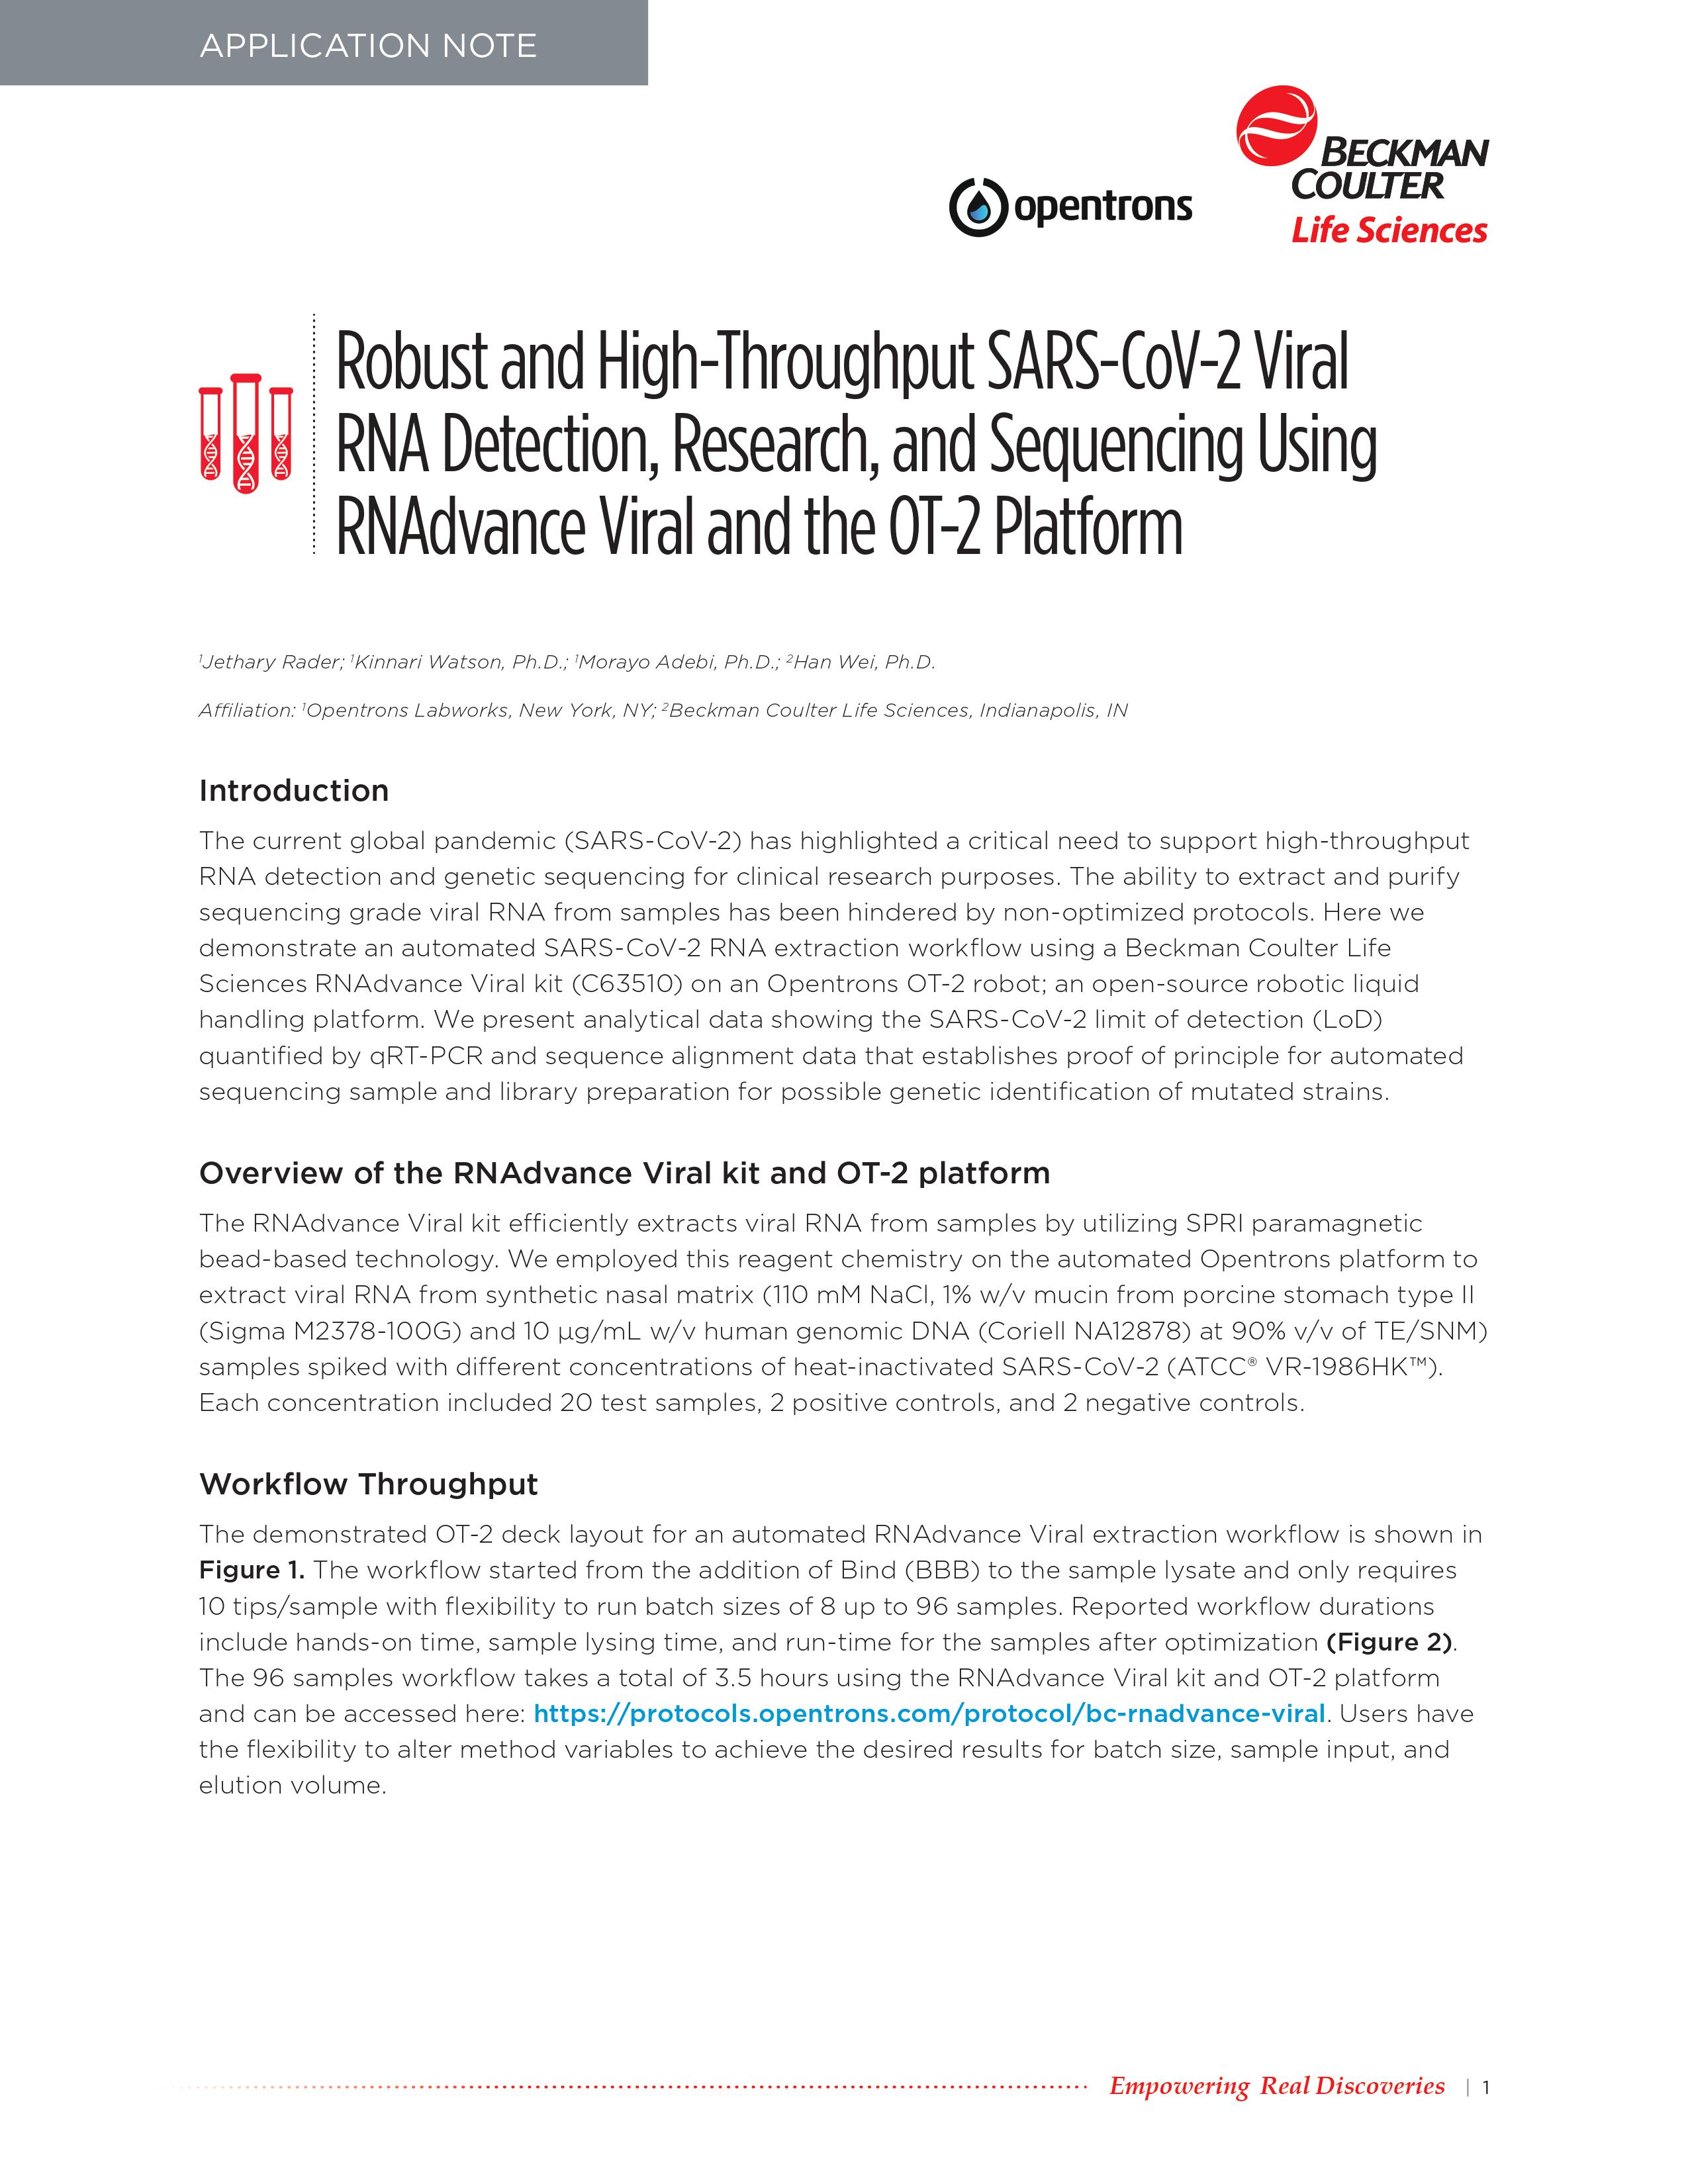 RNAdvance Viral and the OT-2 Platform